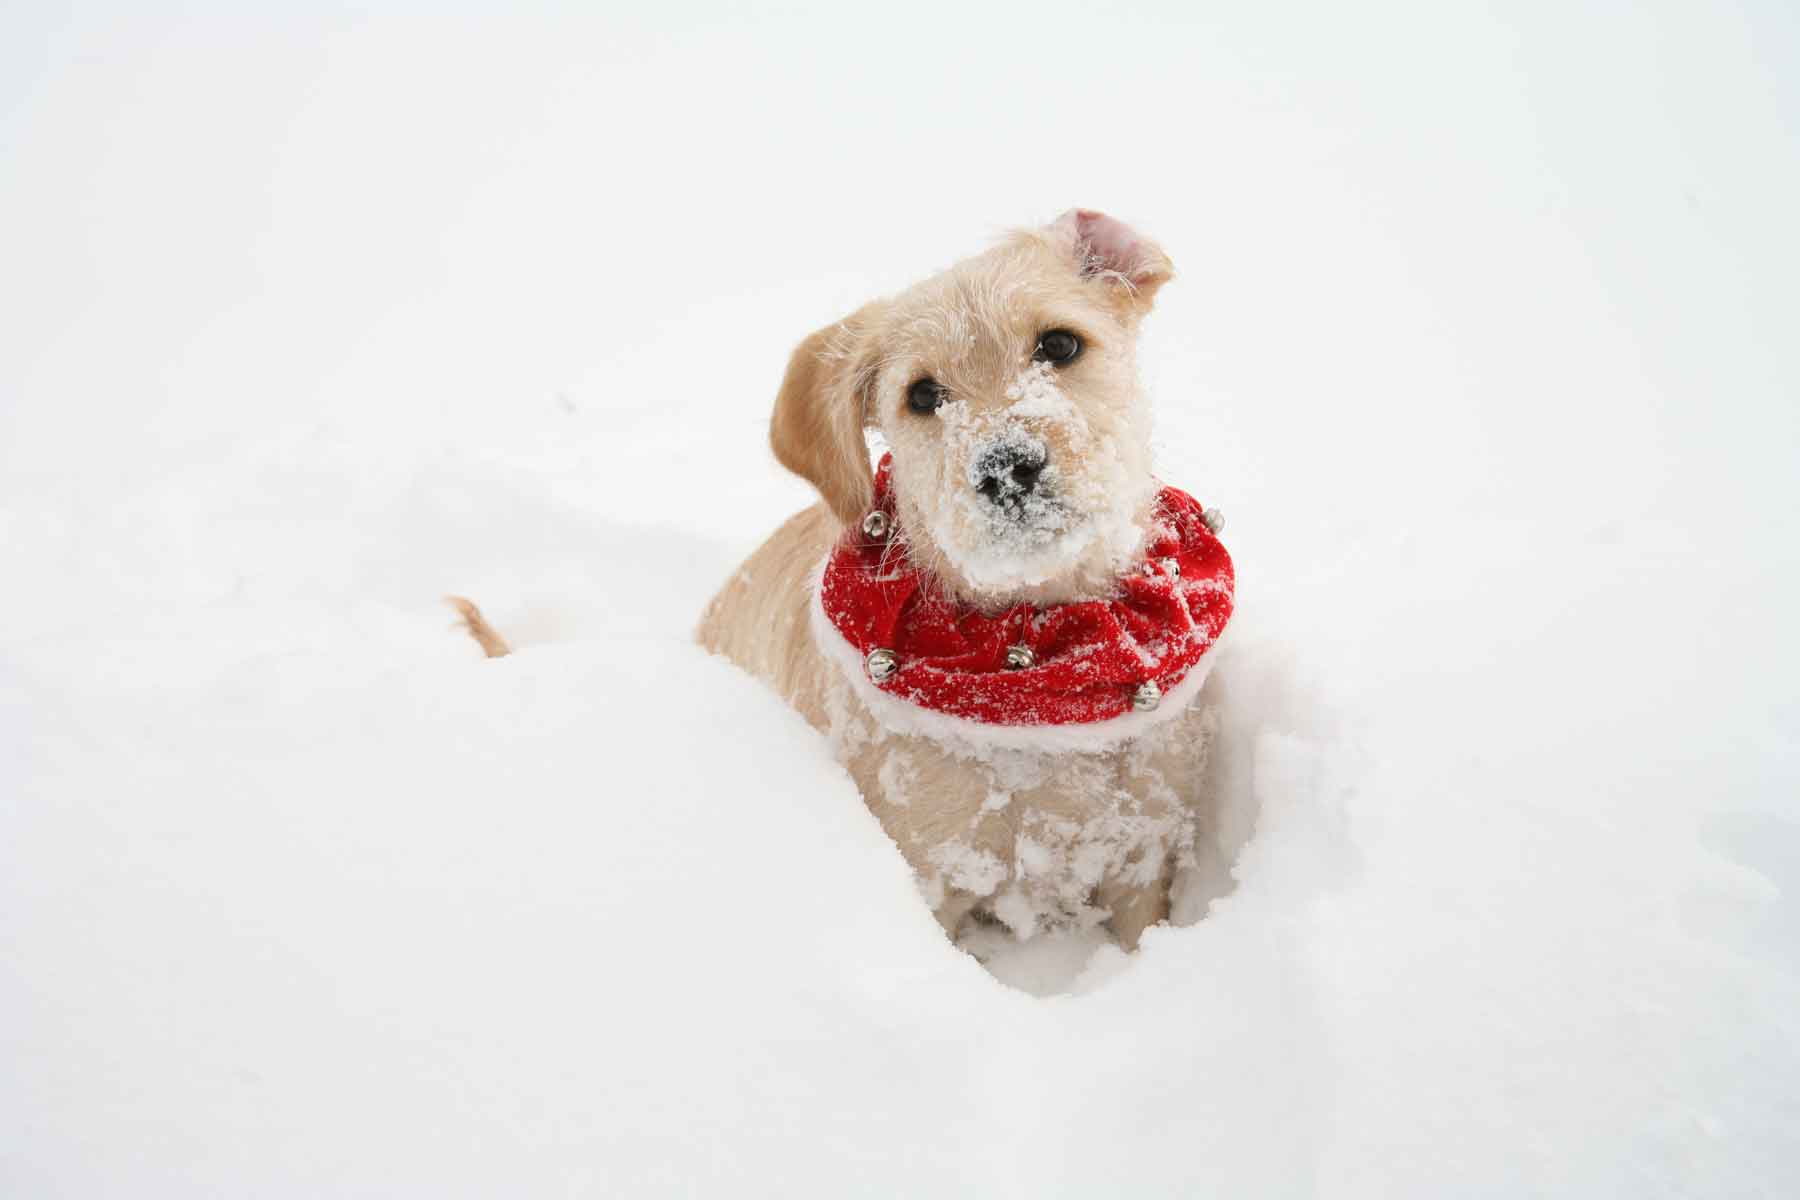 Puppy In Snow Wallpaper Puter